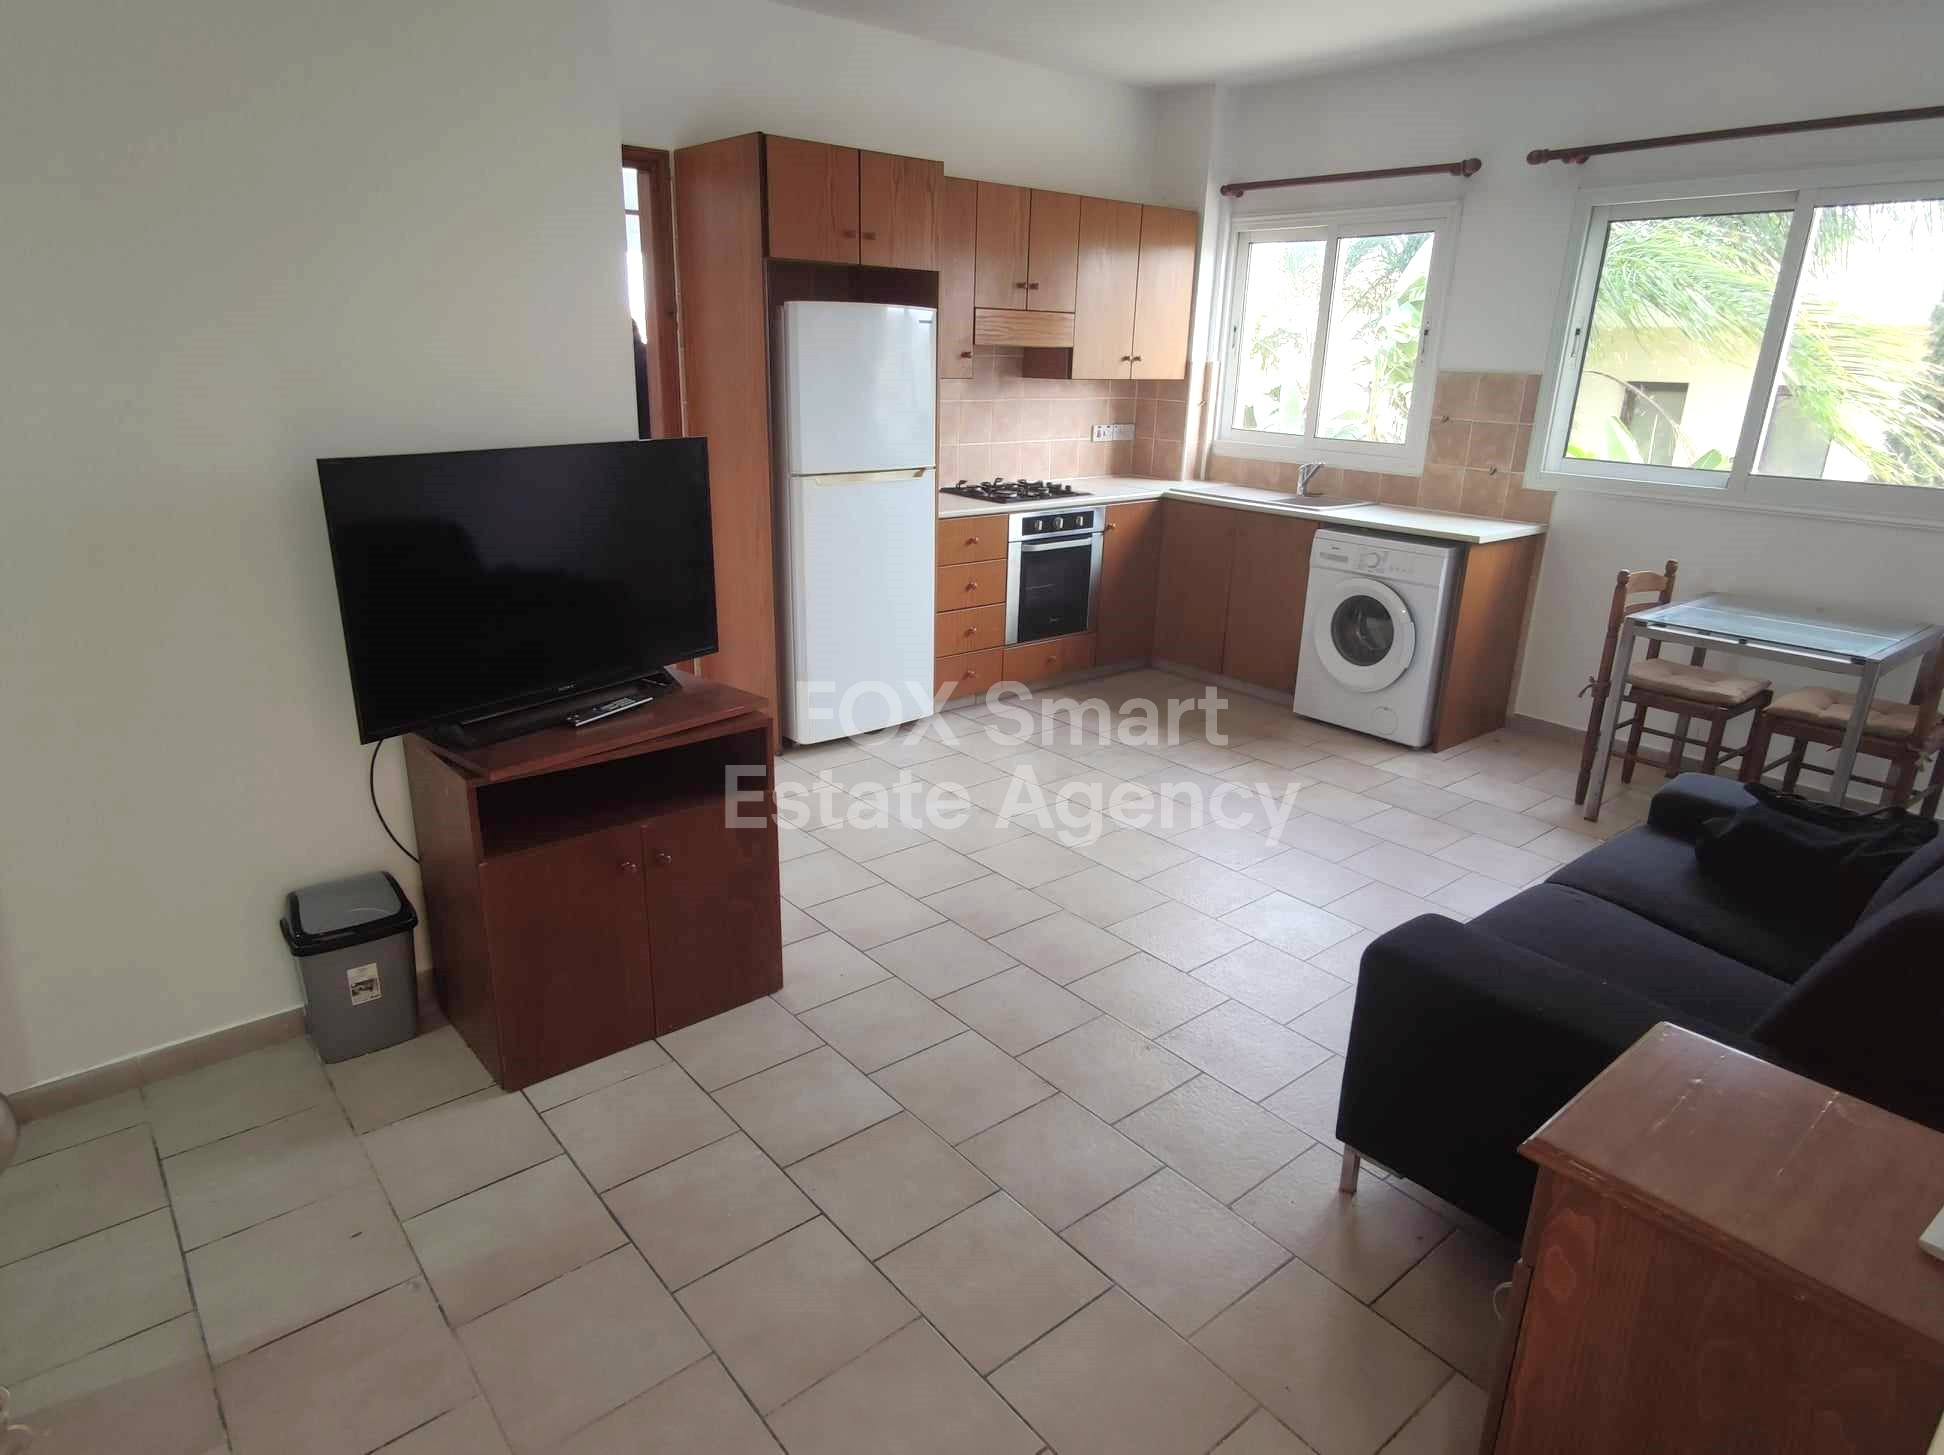 Apartment, For Sale, Larnaca, Oroklini  1 Bedroom 1 Bathroom.....